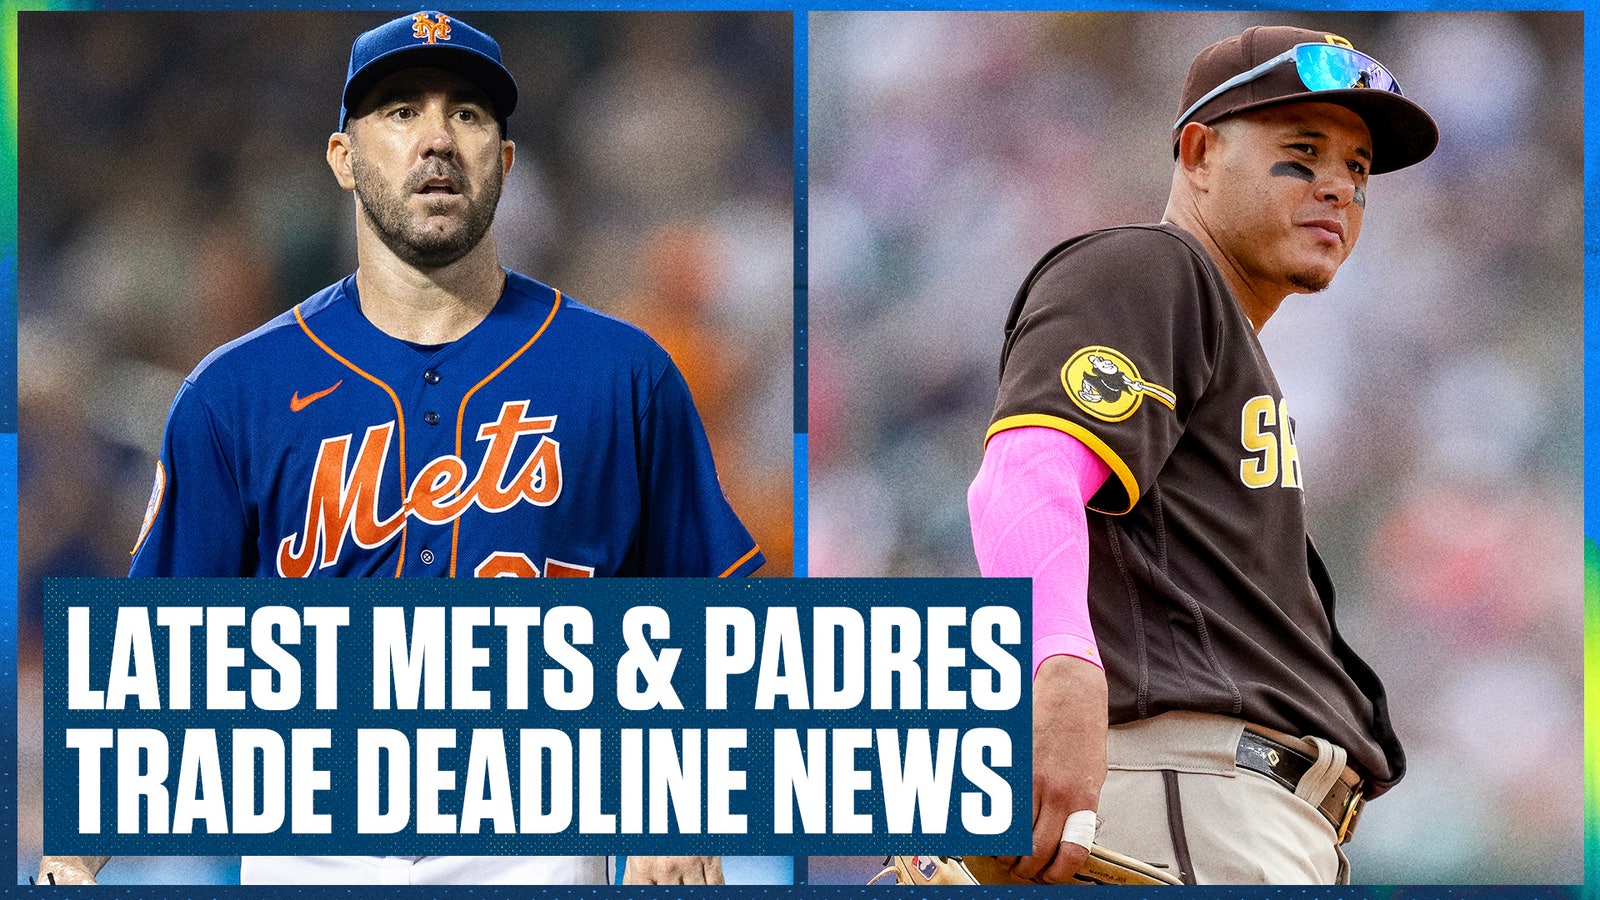 Ken Rosenthal on the latest trade deadline rumors on the Mets, Padres